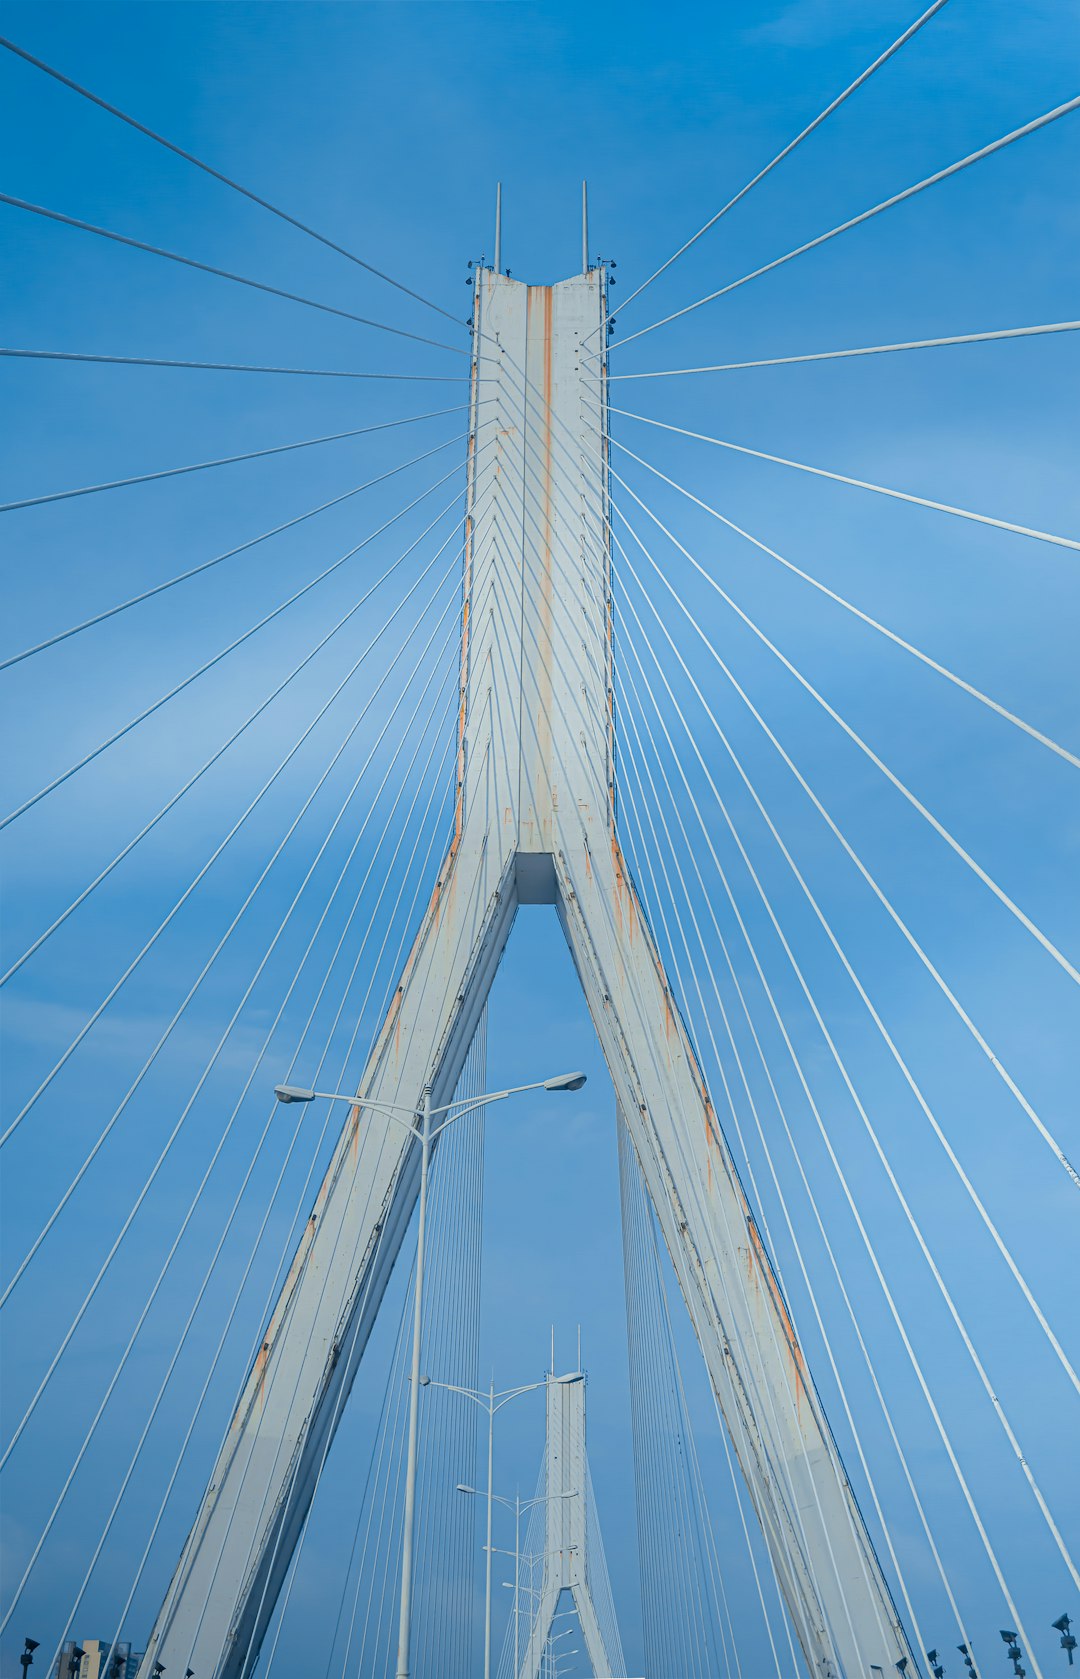 white and blue bridge under blue sky during daytime